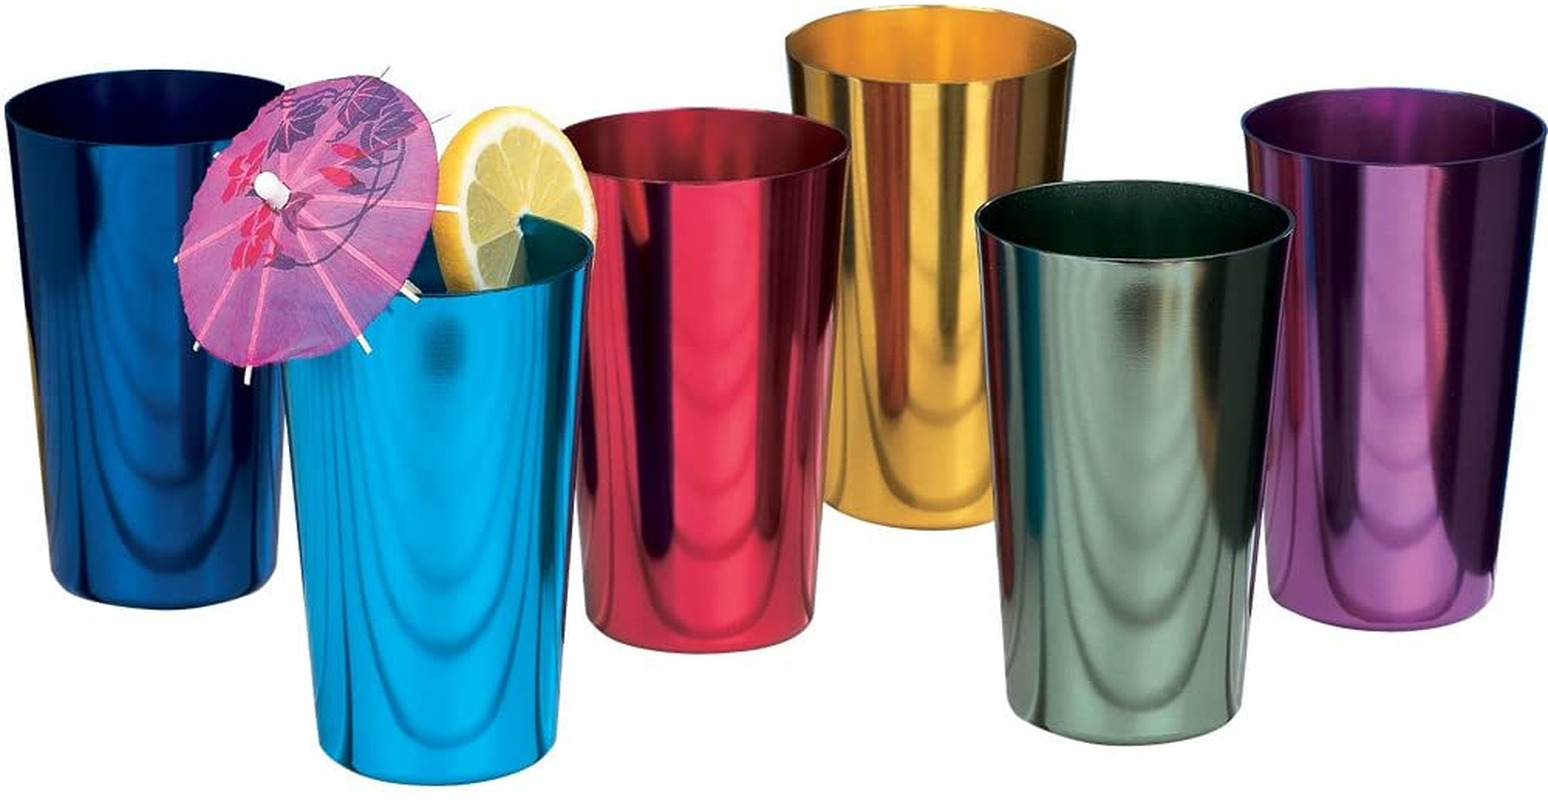 Anodized Aluminum Tumblers Drinking Glasses Vintage Metal Cups Multicolor 6 pcs